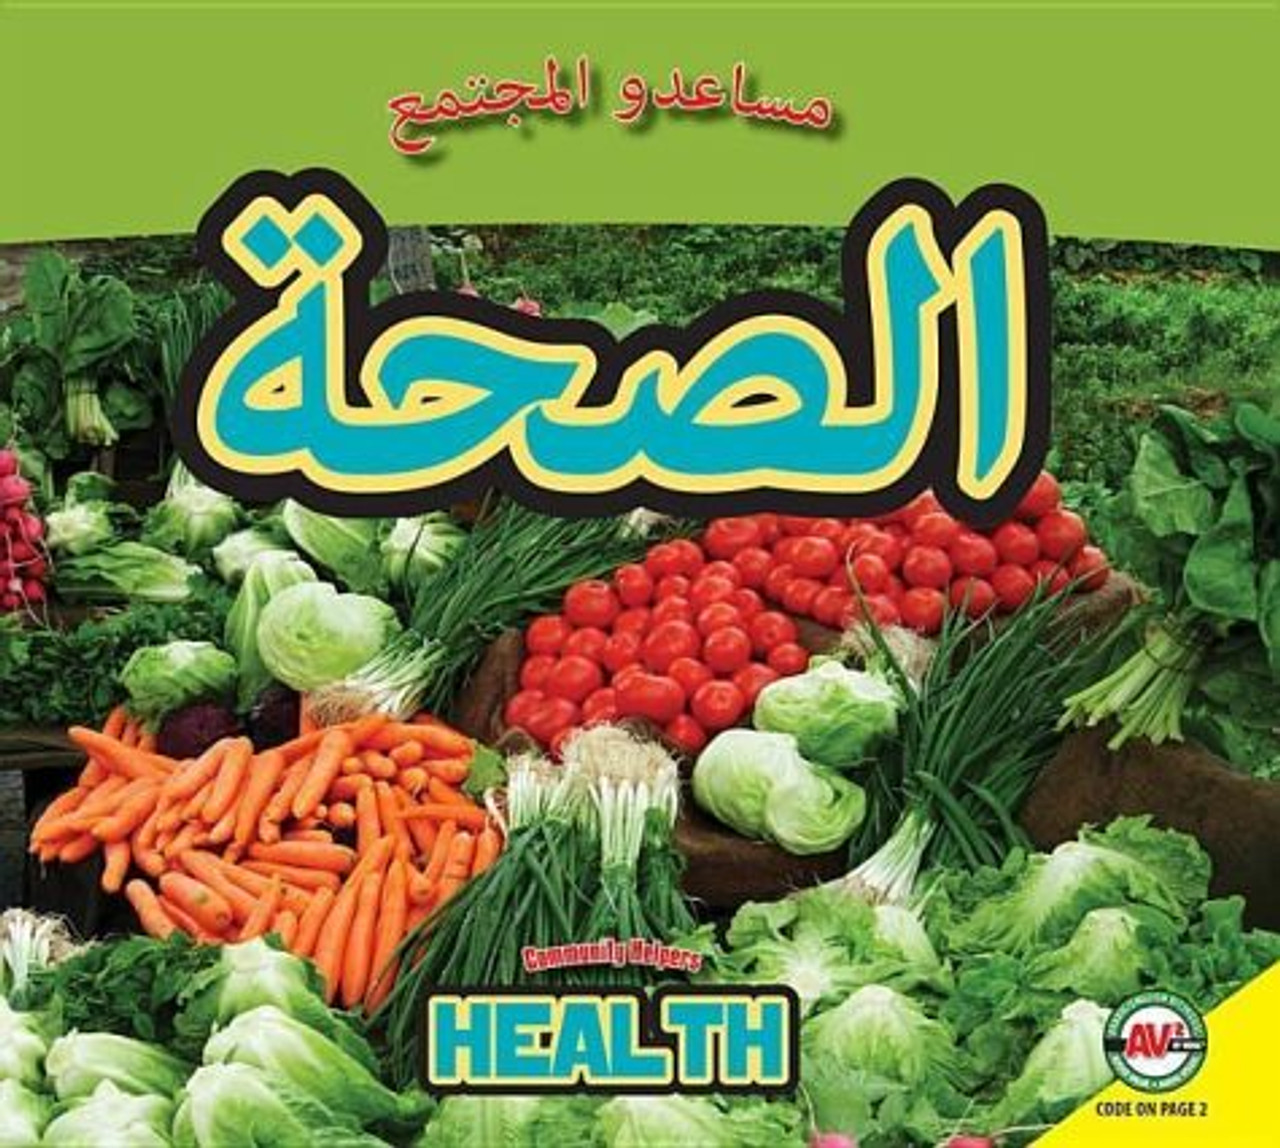 Health (Arabic) by Karen Durrie